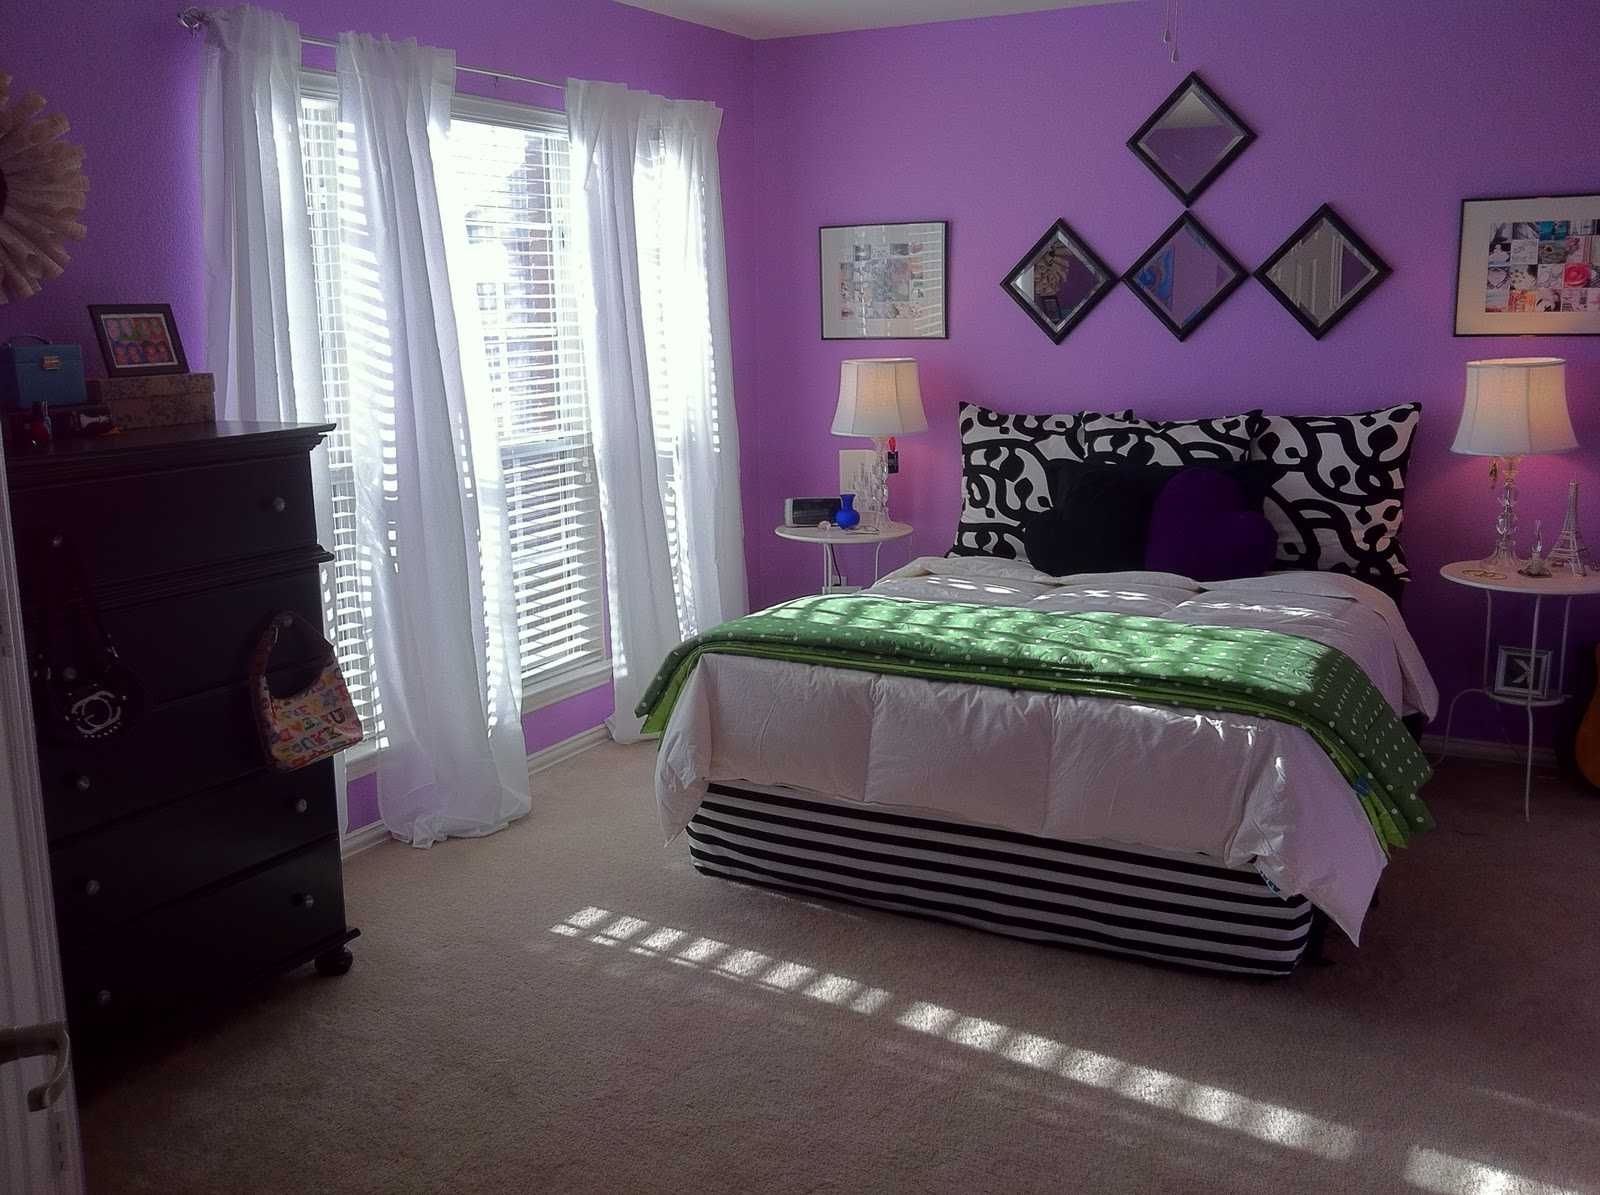 2020 Best of Purple Wall Art For Bedroom